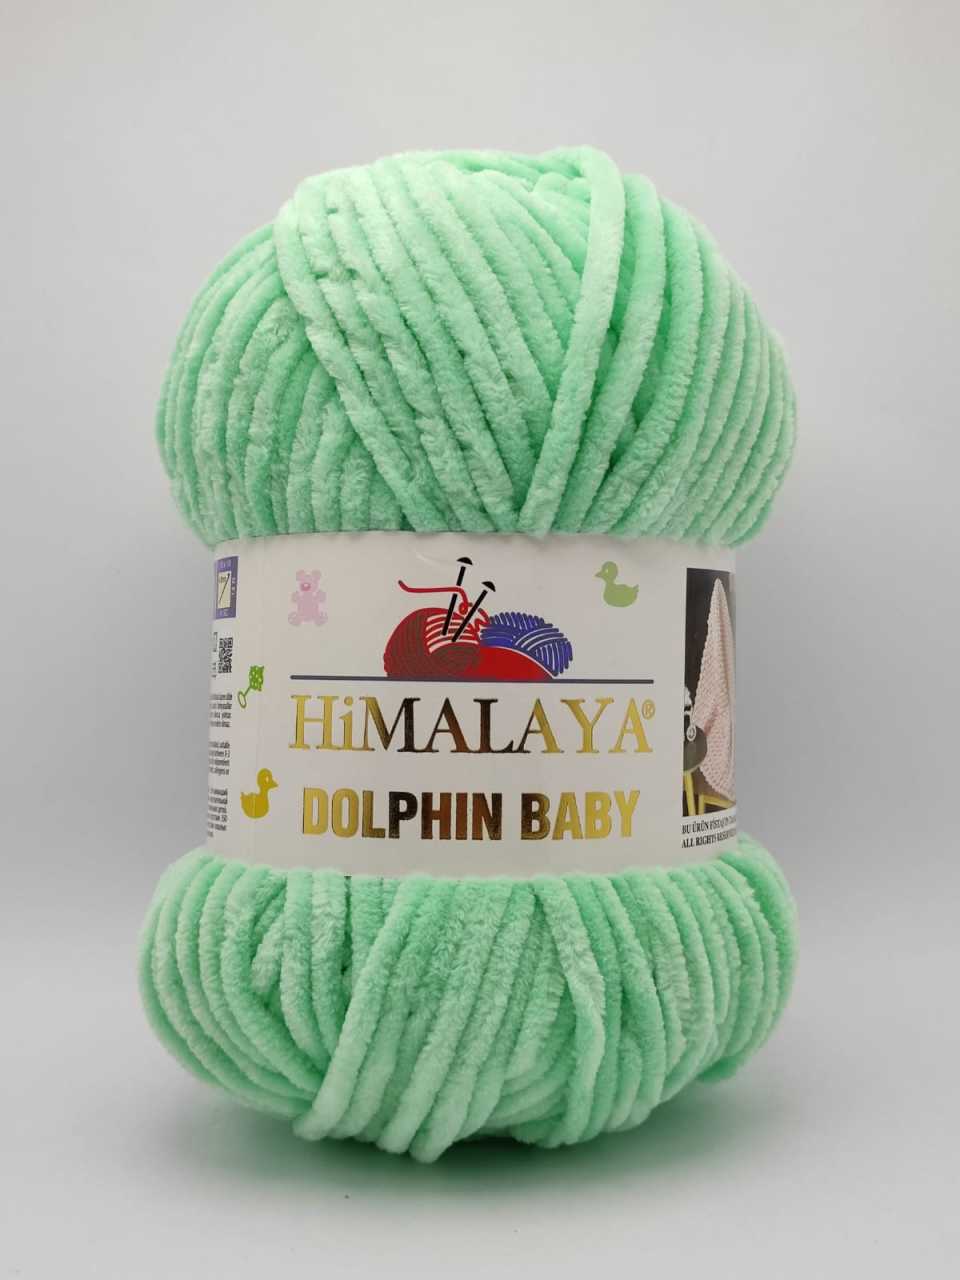 Himalaya Dolphin Baby 80345